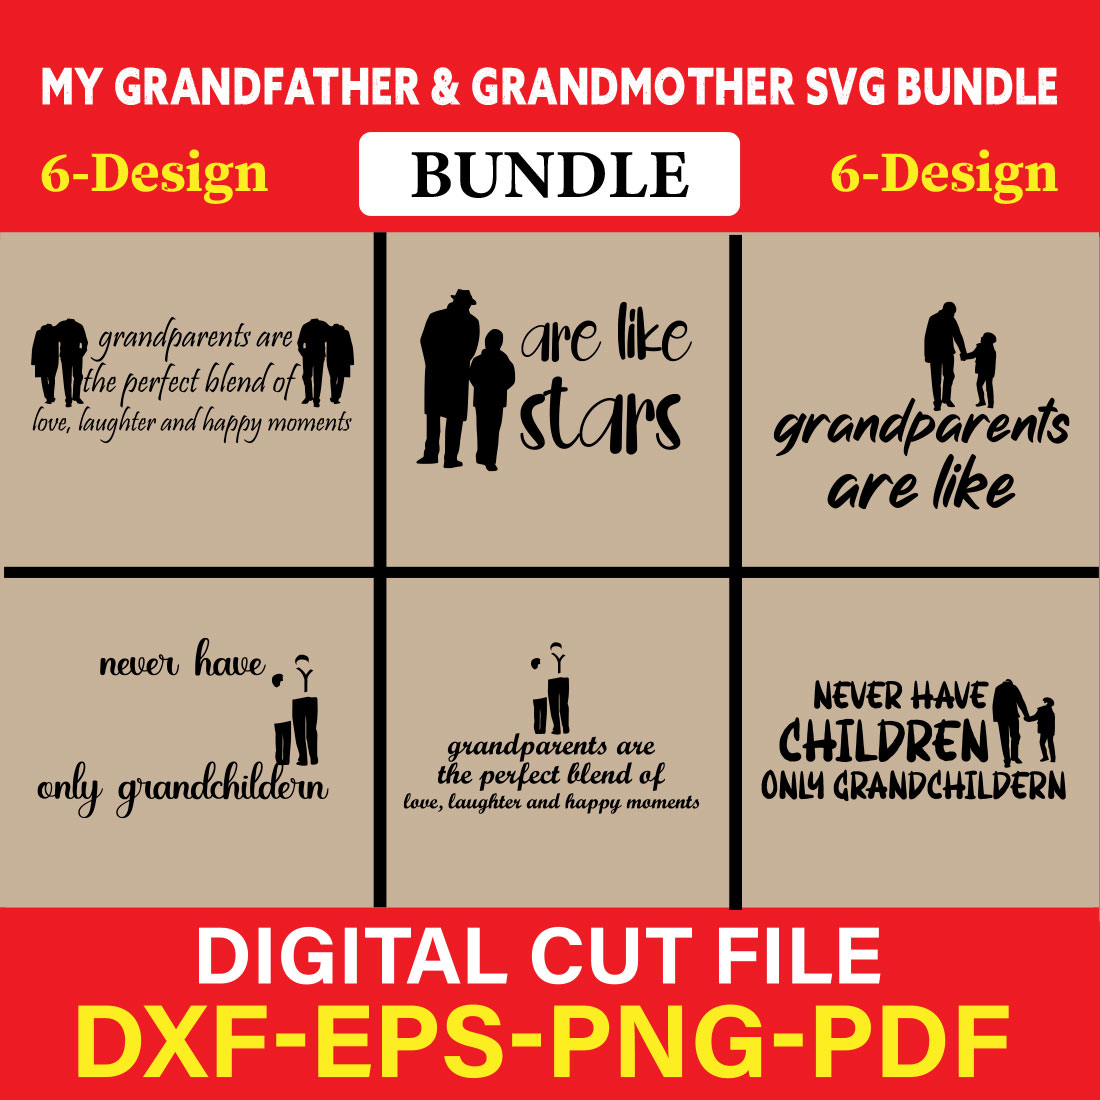 My Grandfather & Grandmother T-shirt Design Bundle Vol-4 cover image.